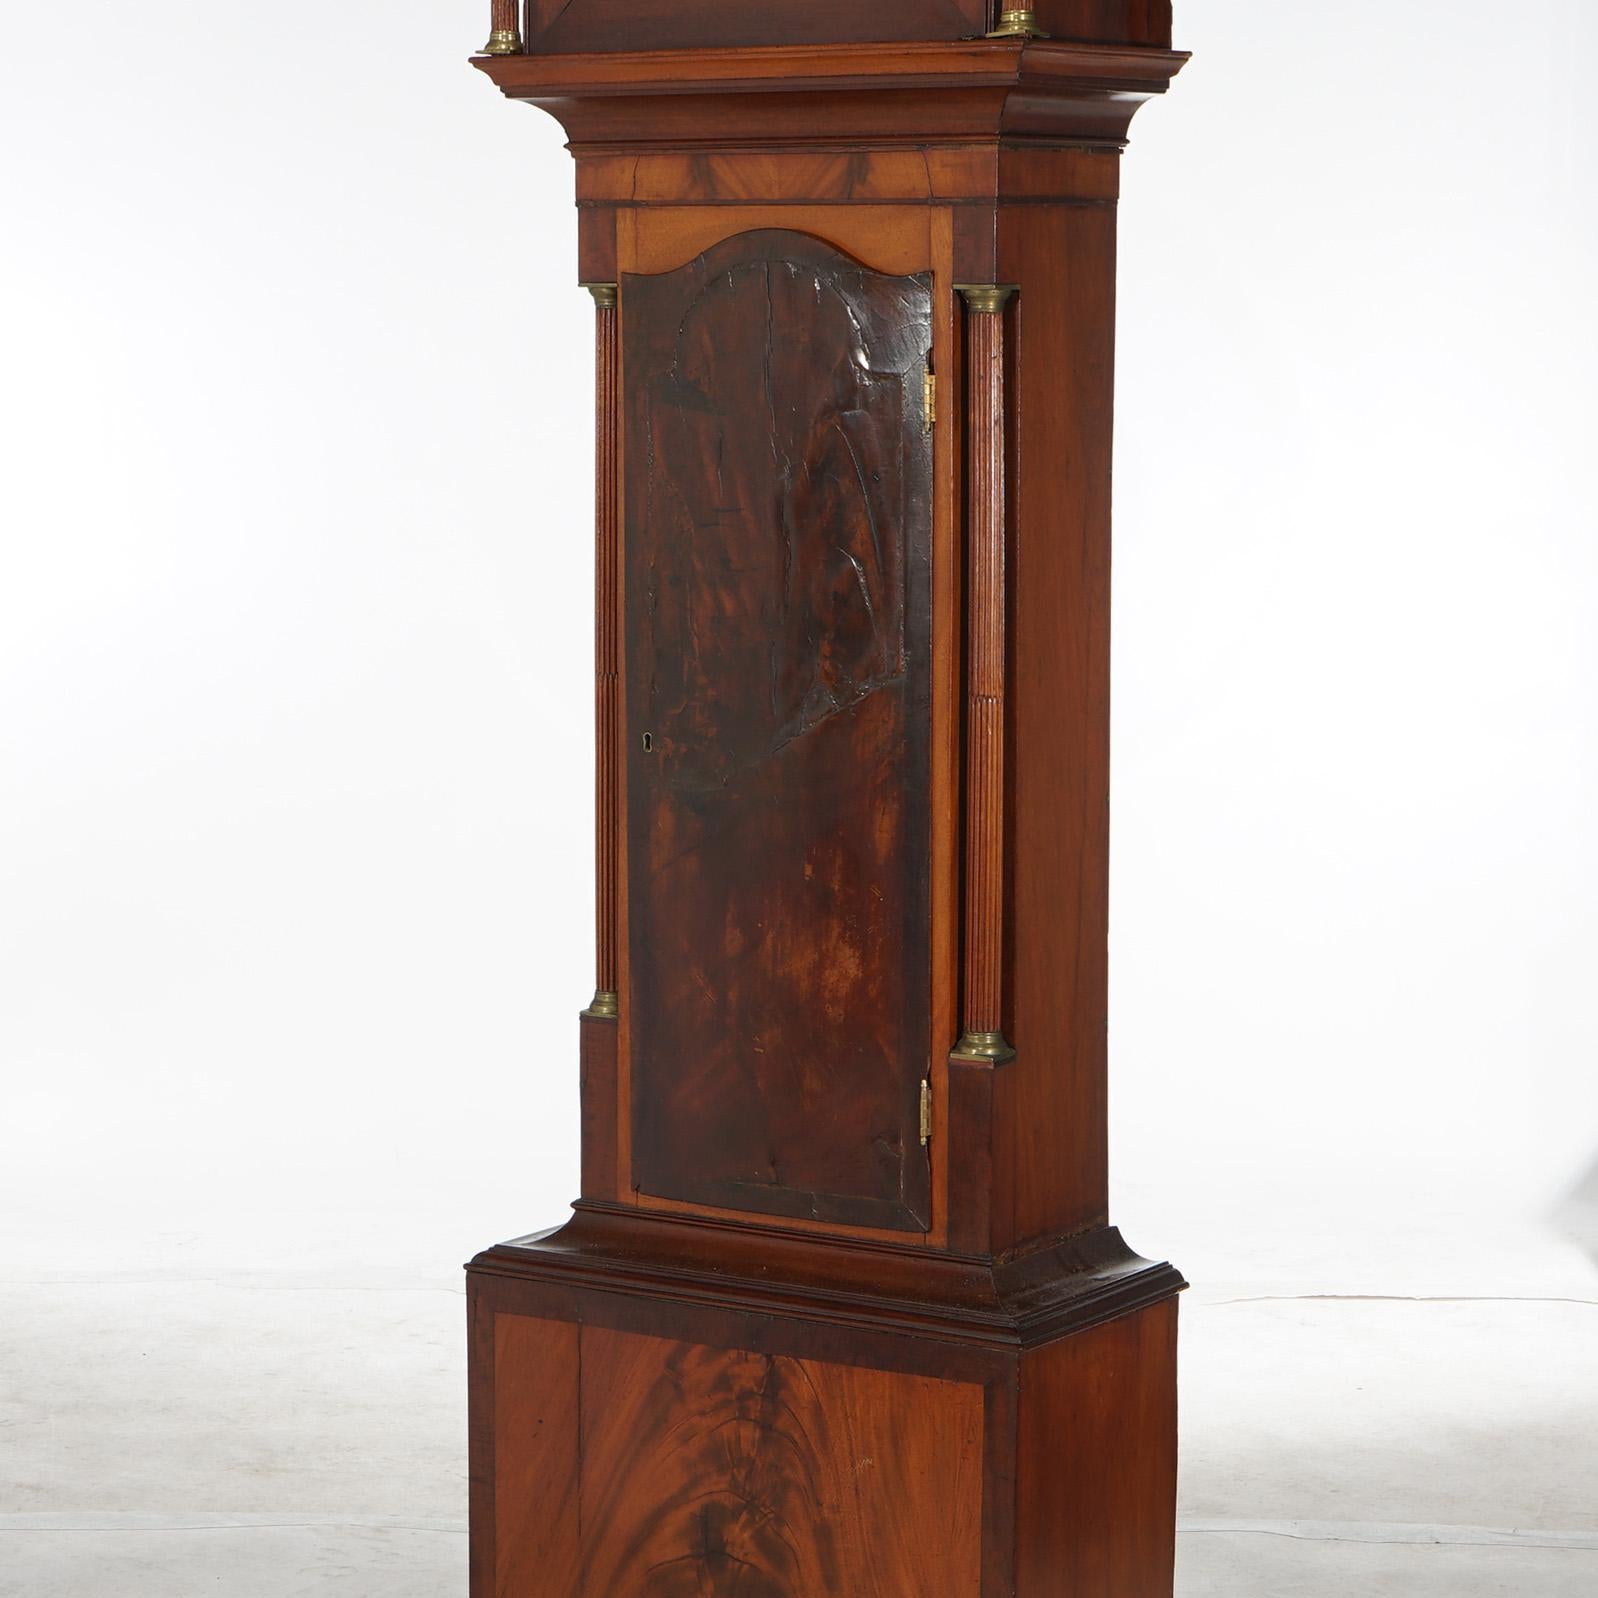 Antique English J. Carpenter Harris Town Flame Mahogany Grandfather Clock 19thC For Sale 3